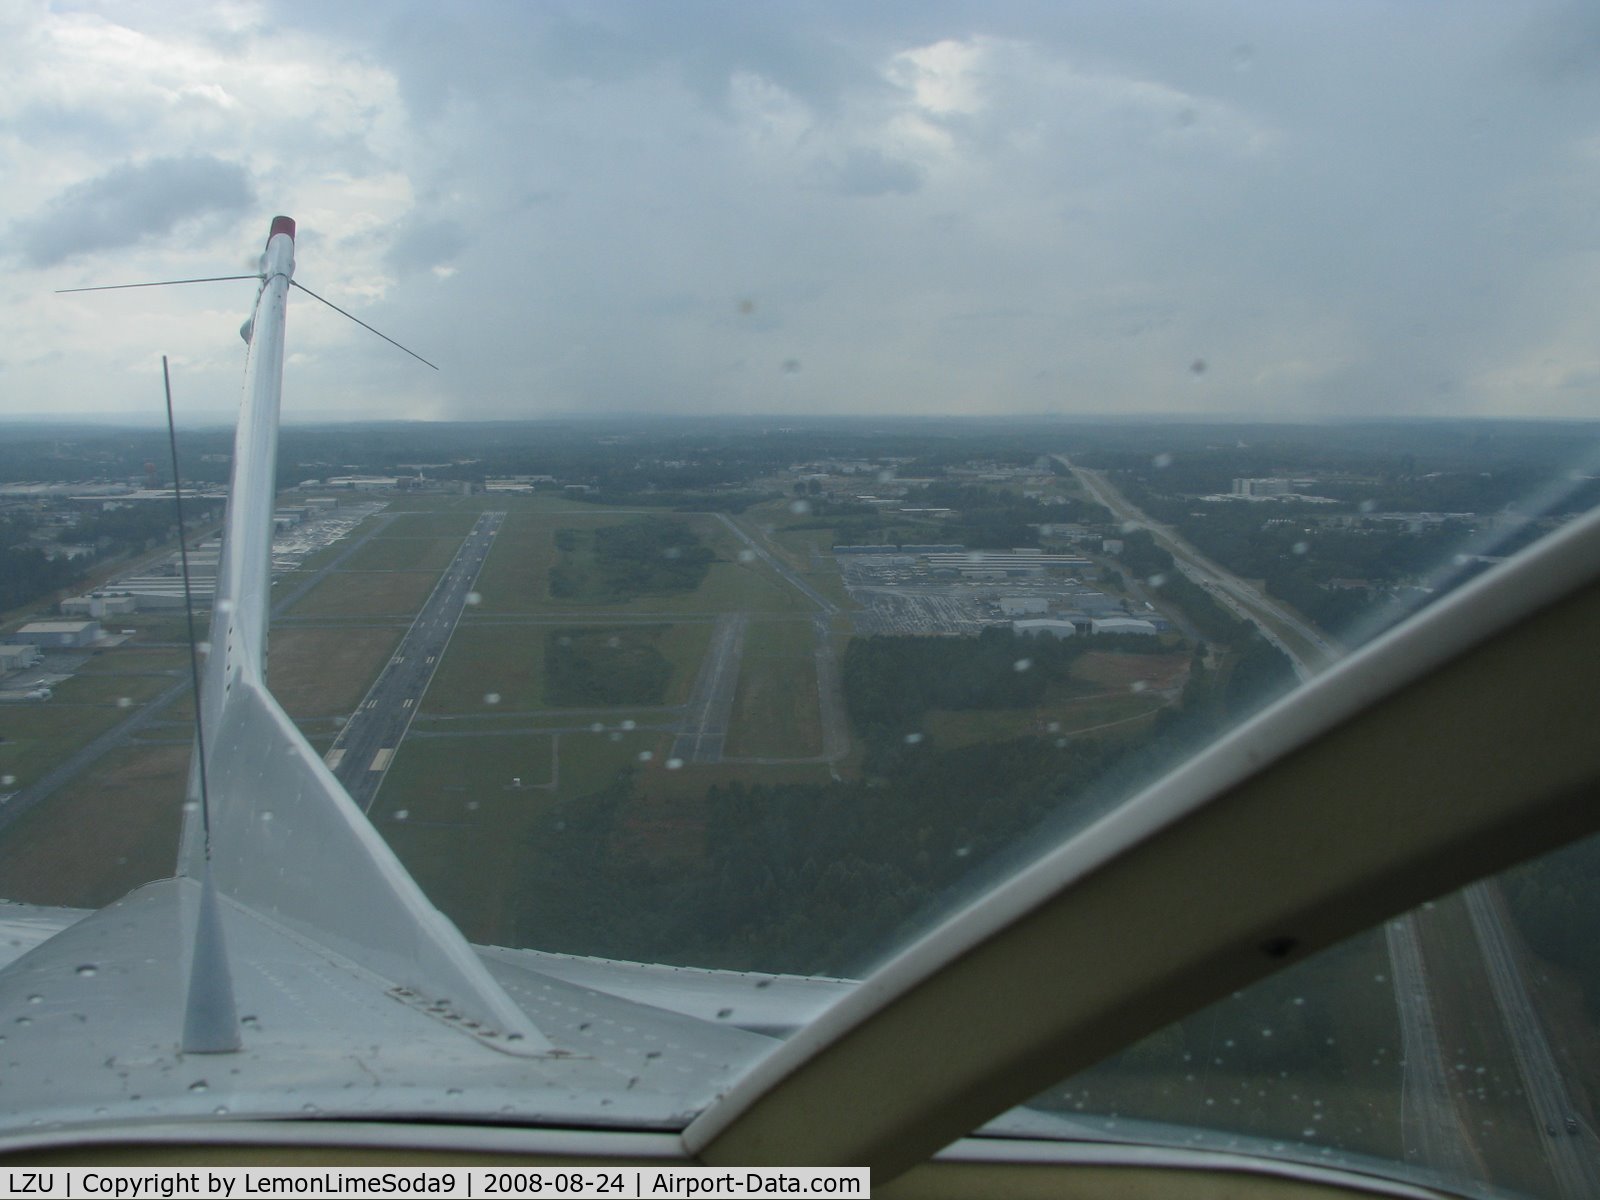 Gwinnett County - Briscoe Field Airport (LZU) - On upwind on a windy day.